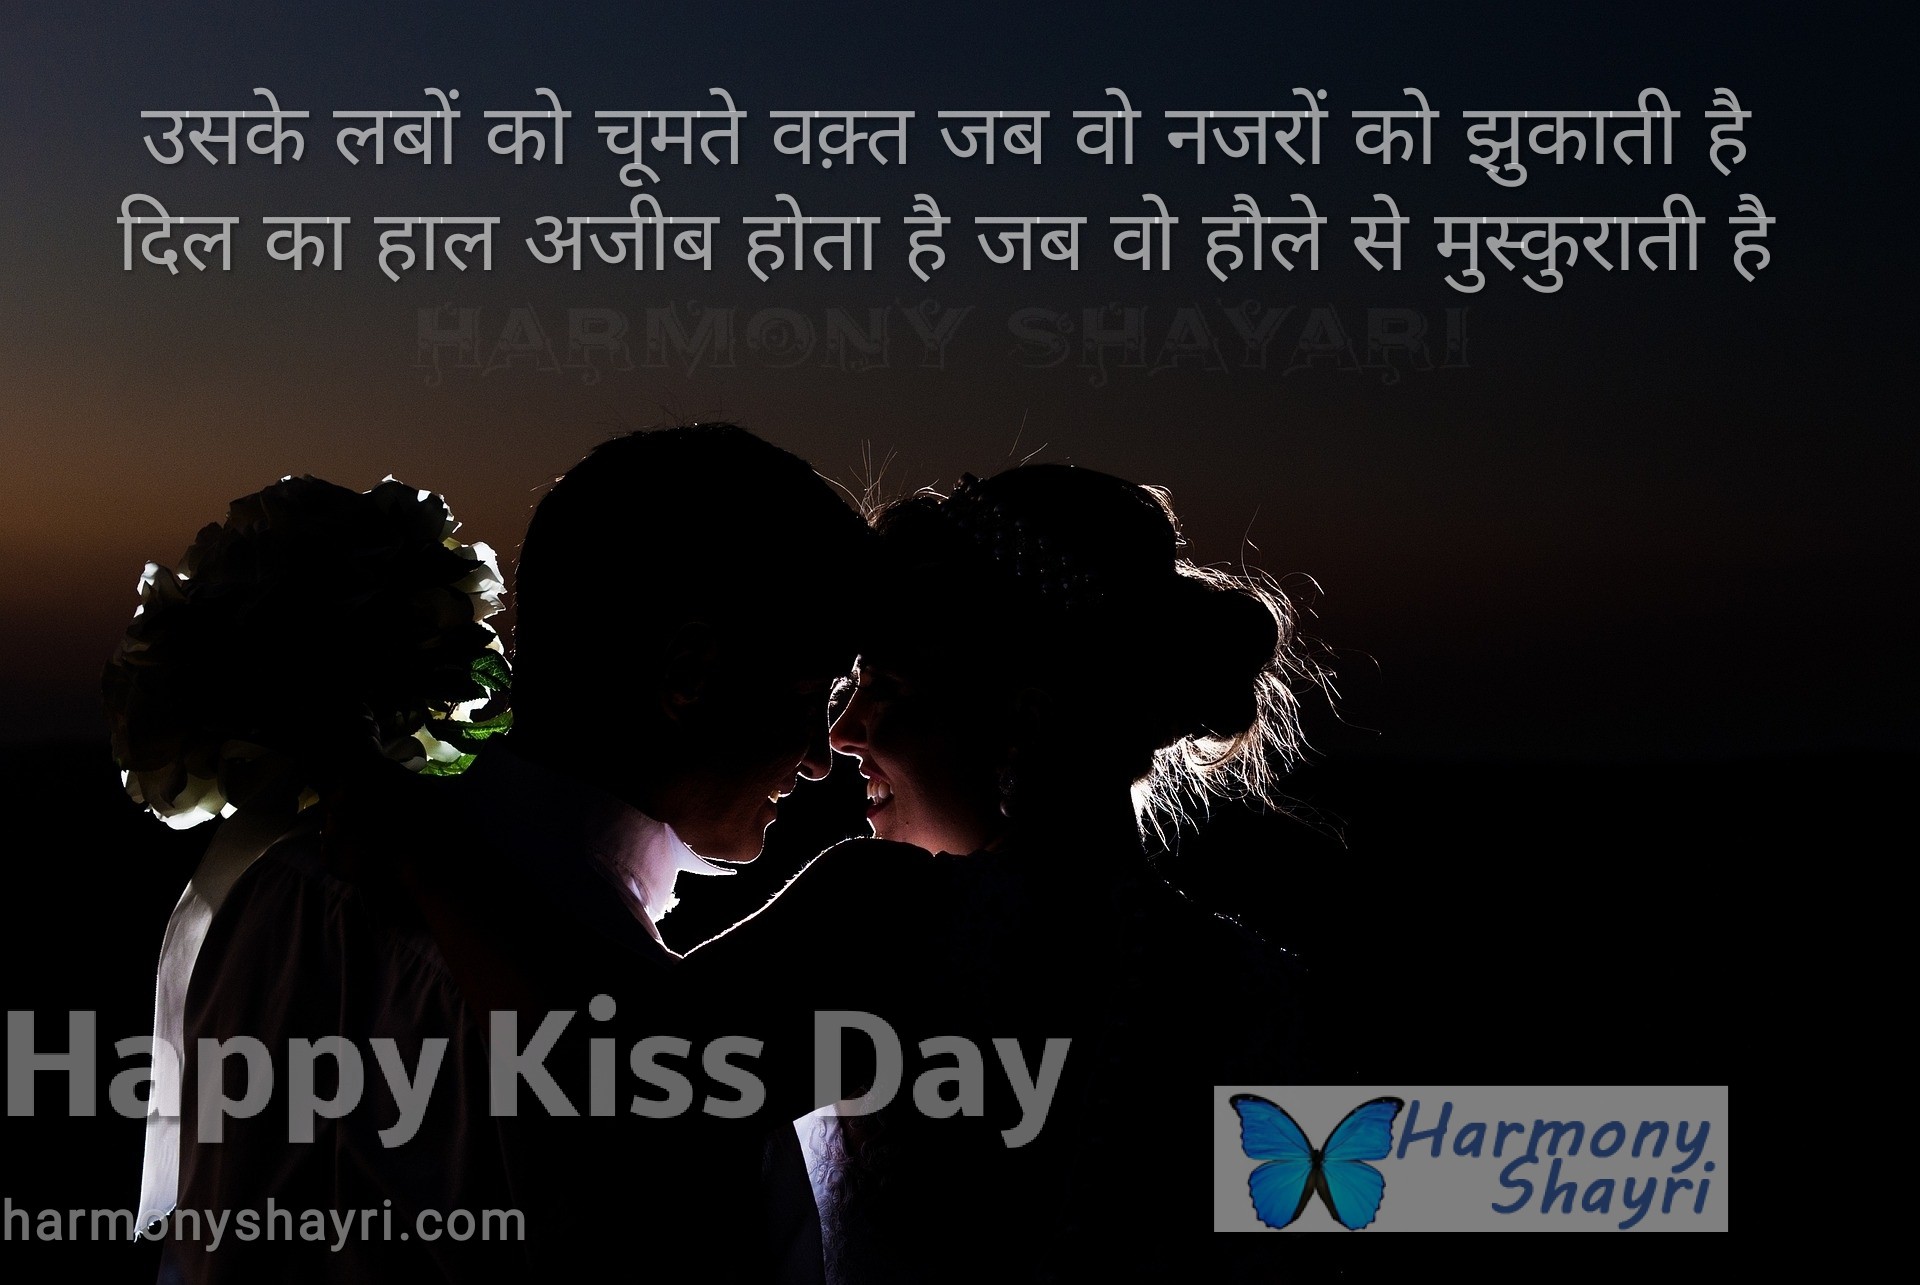 Uske labon ko choomte waqt jab wo – Happy Kiss Day